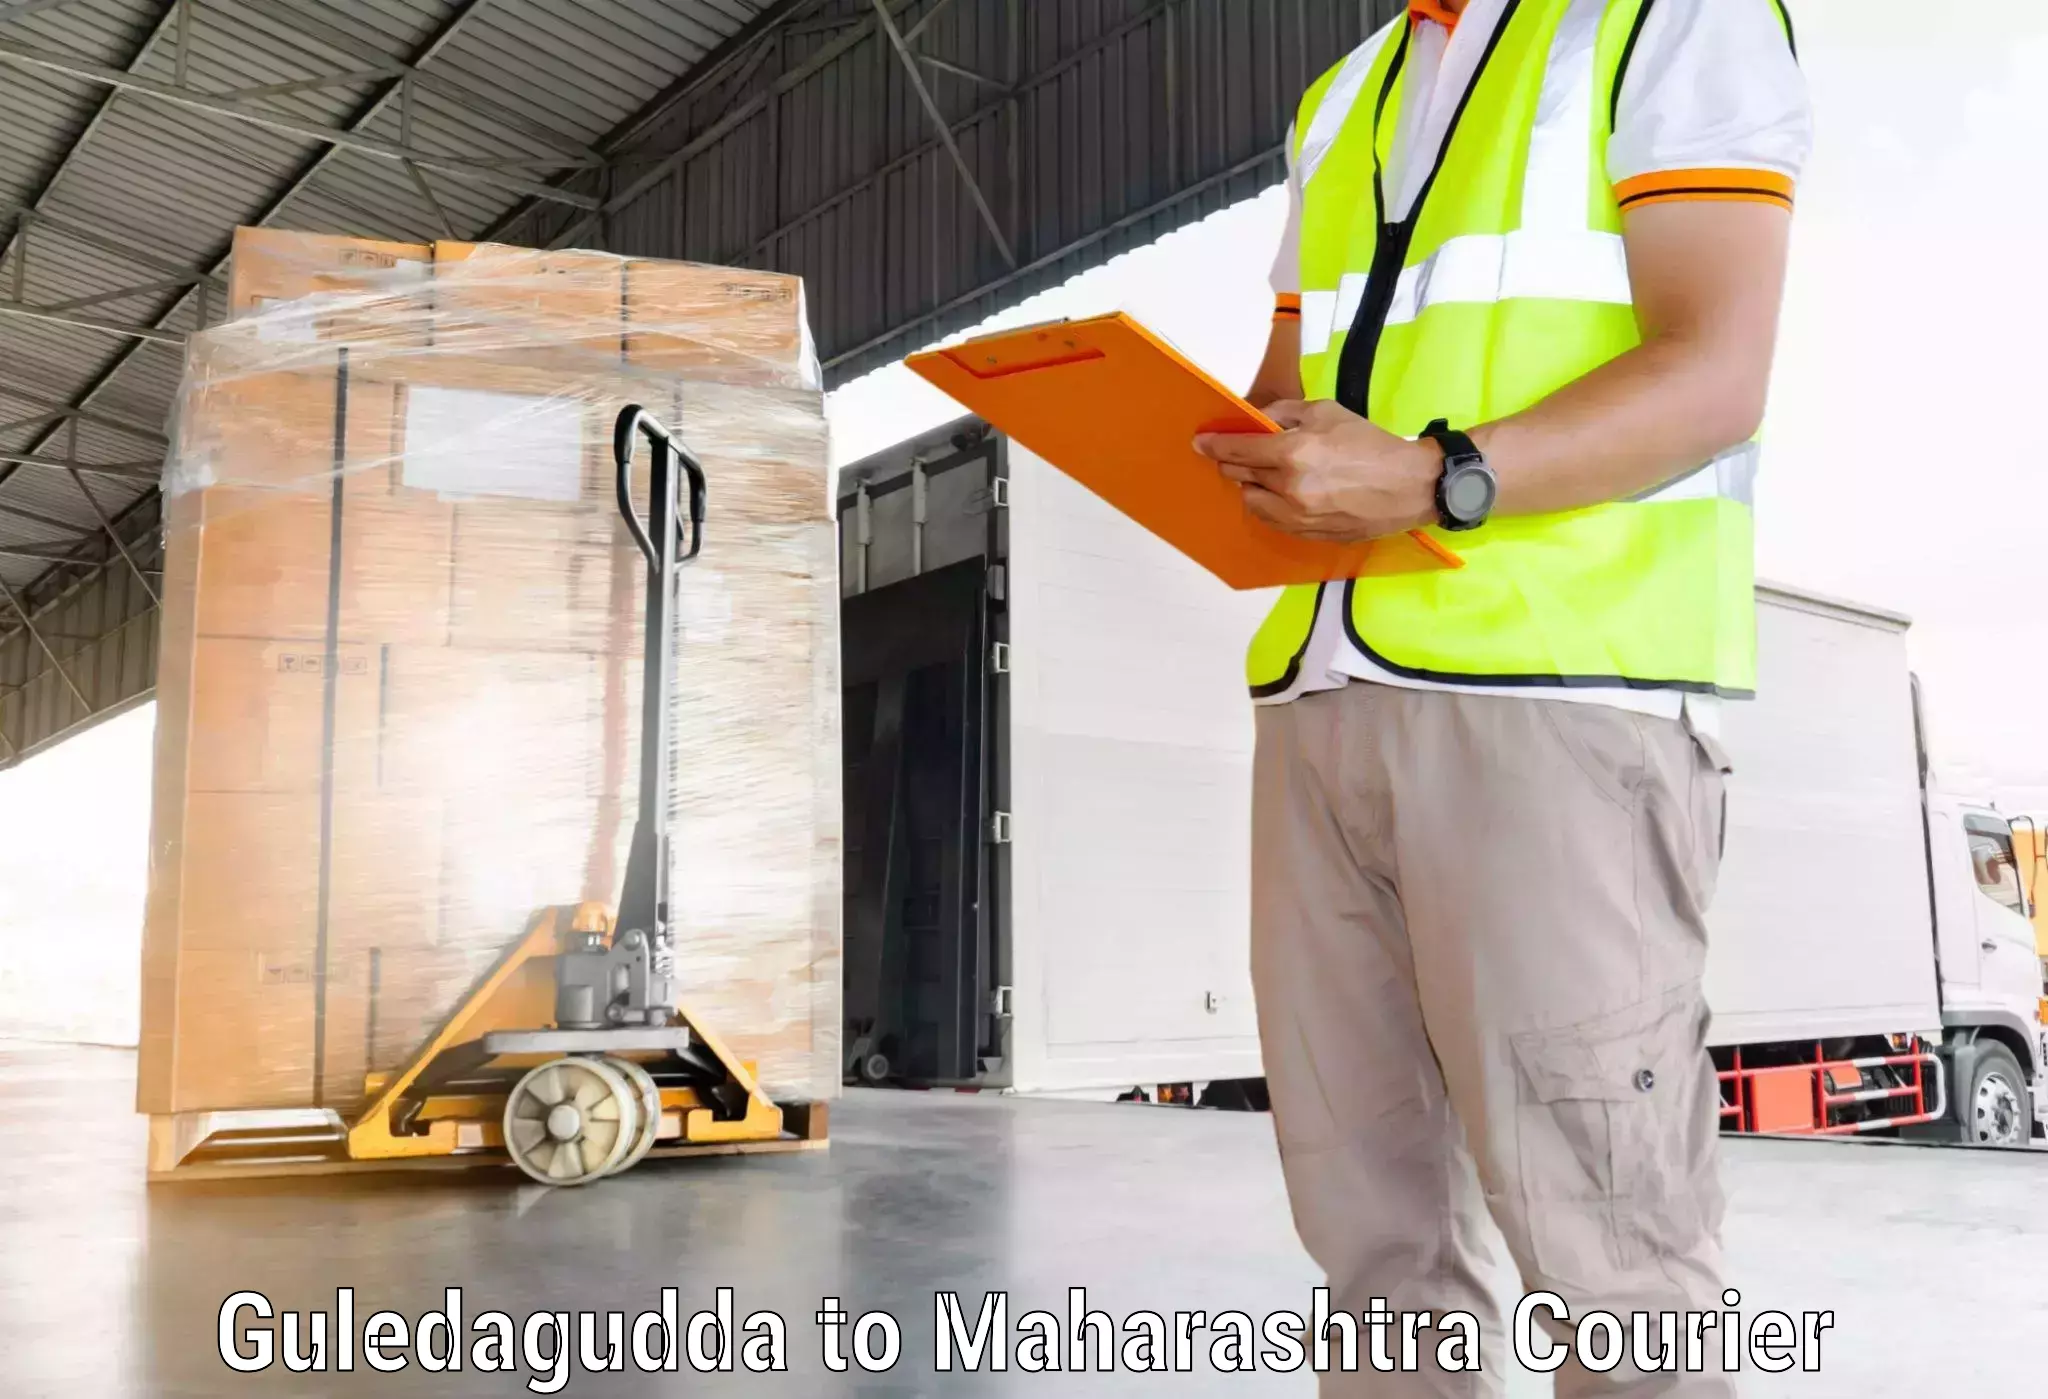 Seamless shipping experience Guledagudda to Vasmat